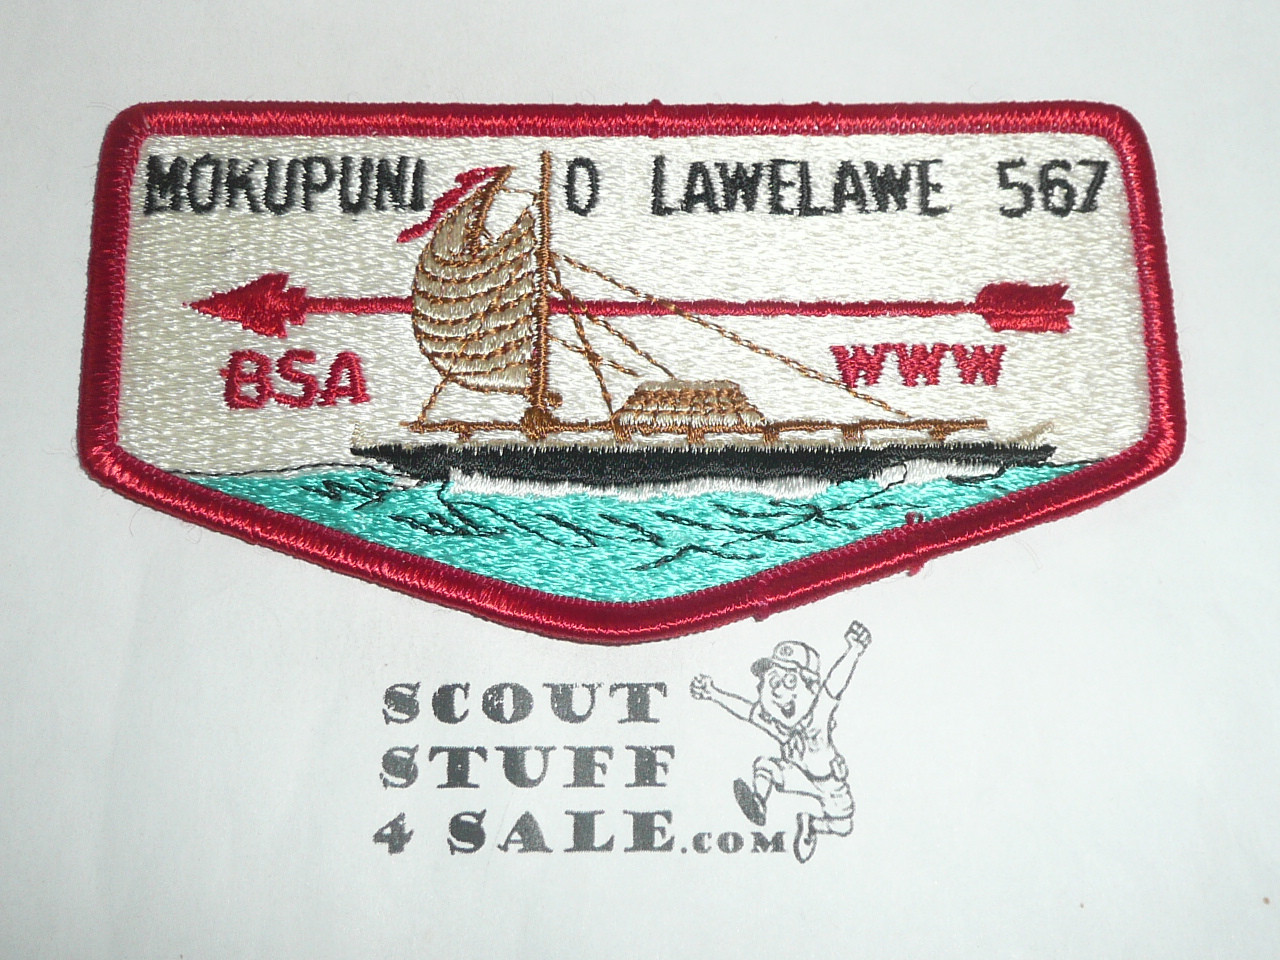 Order of the Arrow Lodge #567 Mokupuni O Lawelawe s2 Flap Patch